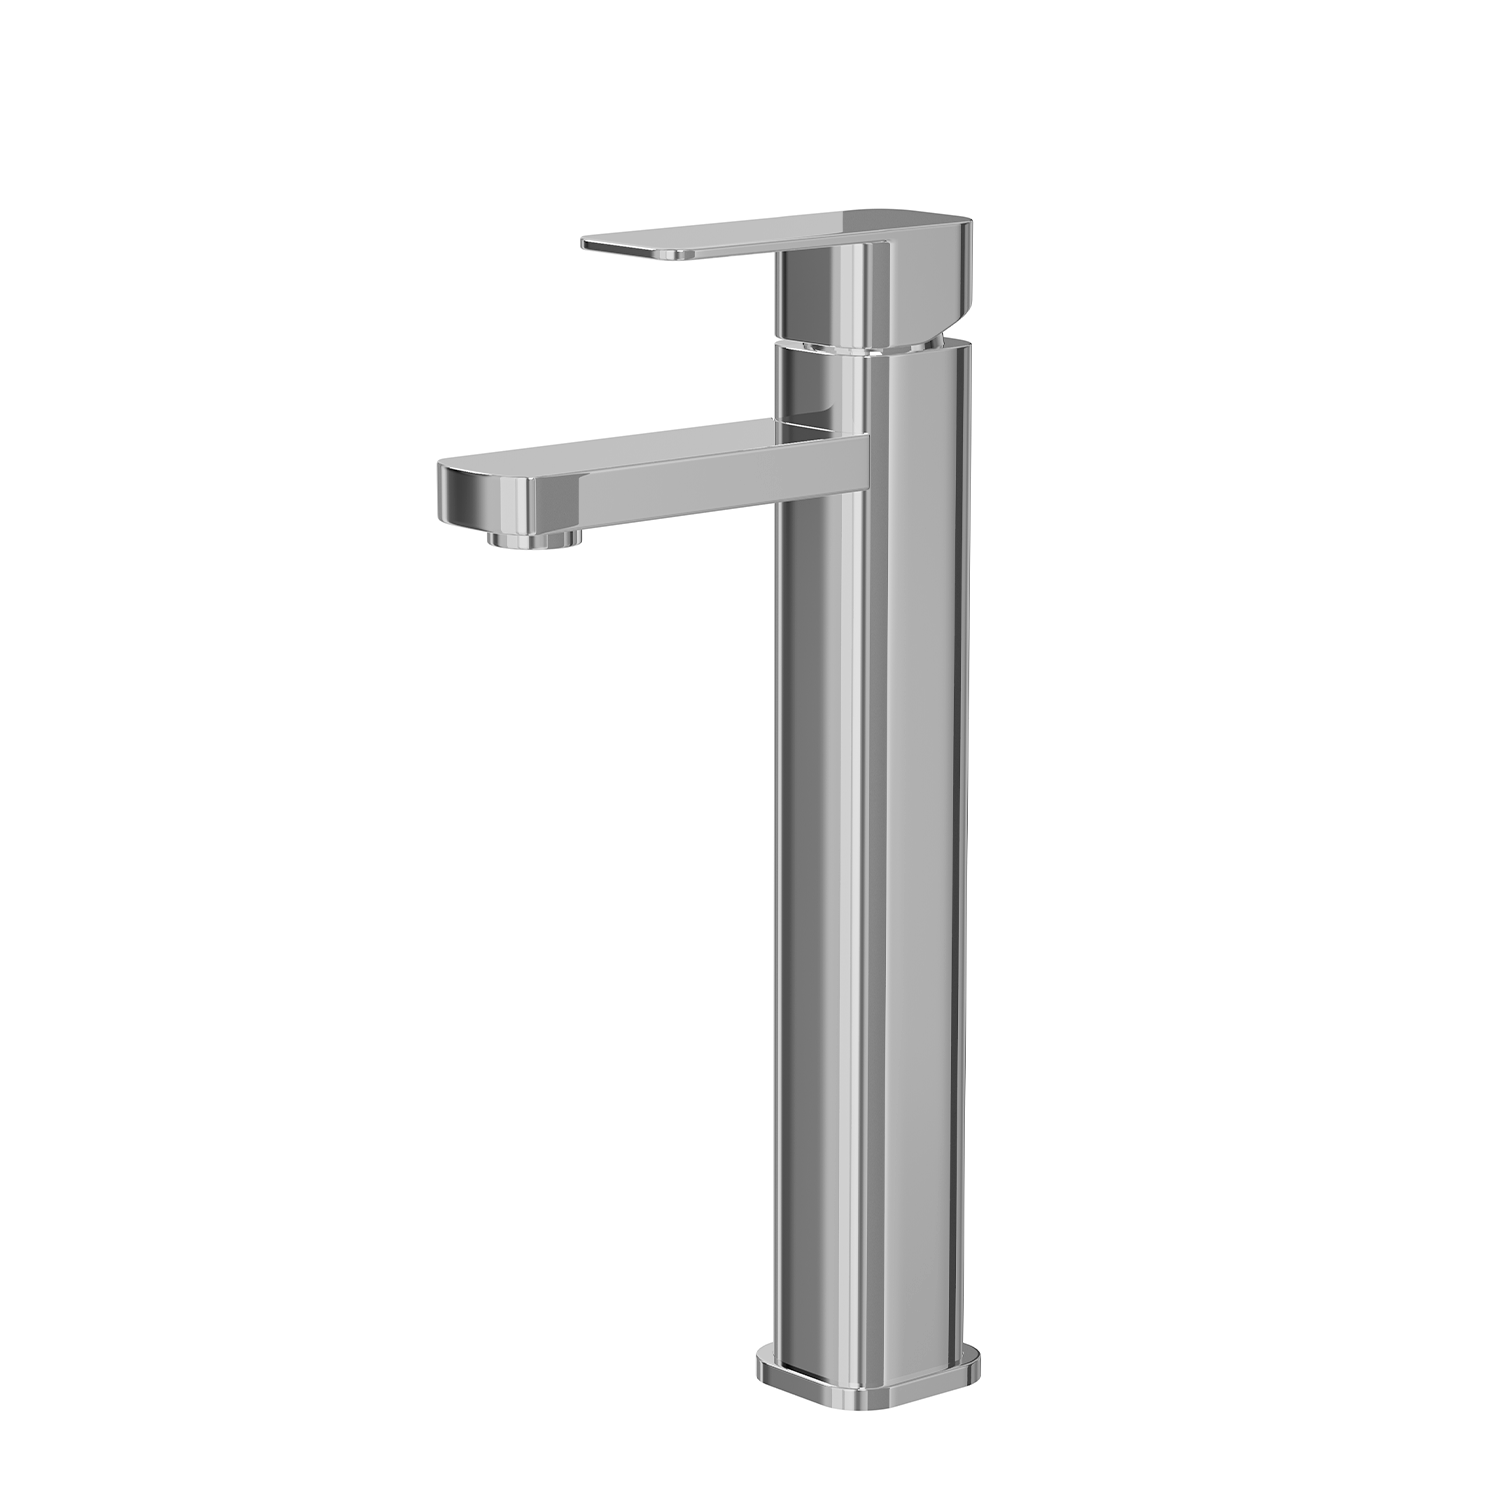 DAX Single Handle Bathroom Faucet - Matte Black Finish (DAX-6941B)